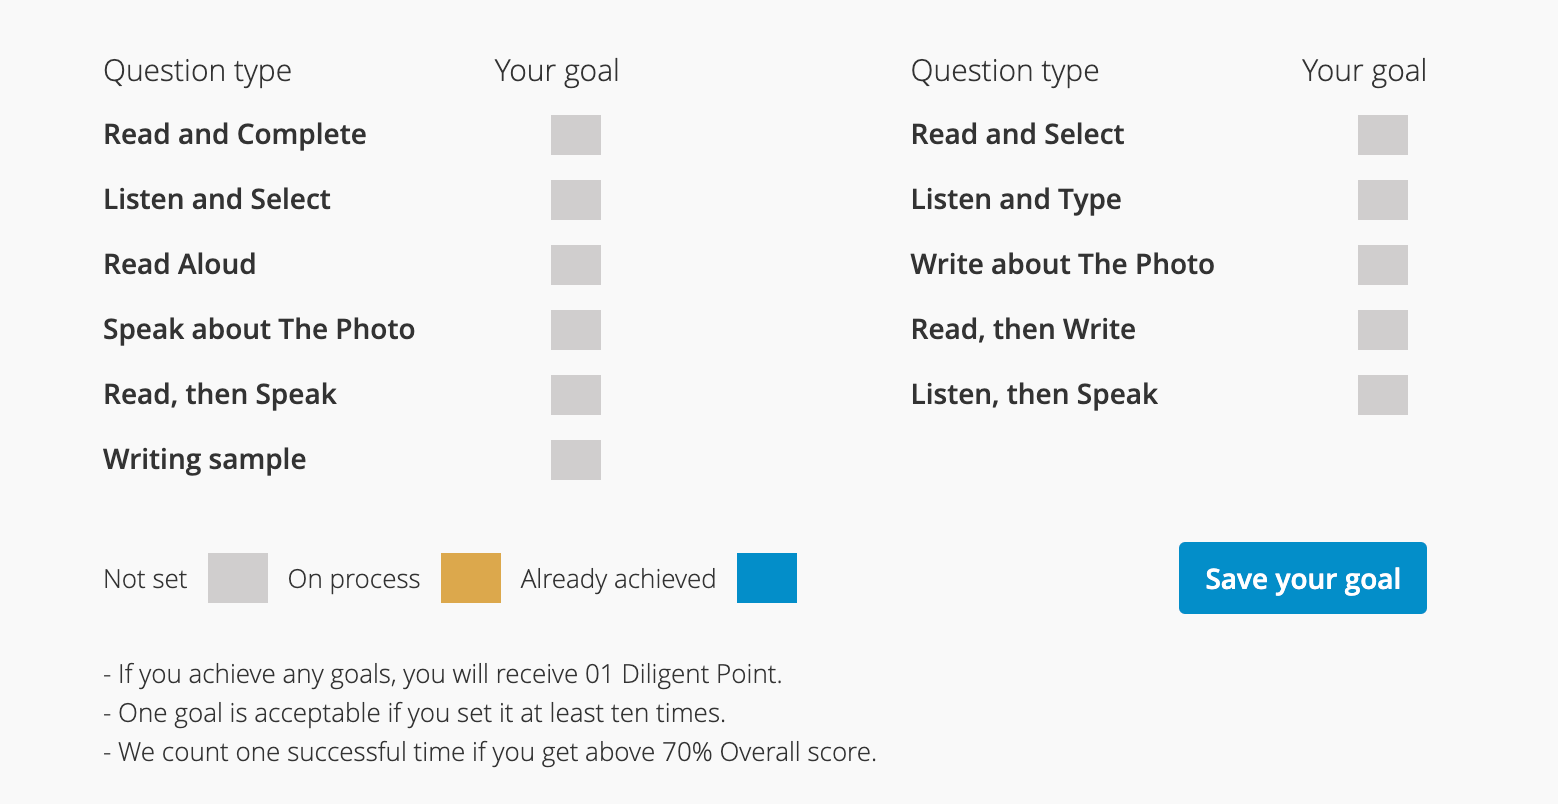 setting goals duolingo test, det practice platform, Duolingo Test preparation, duolingo practice test